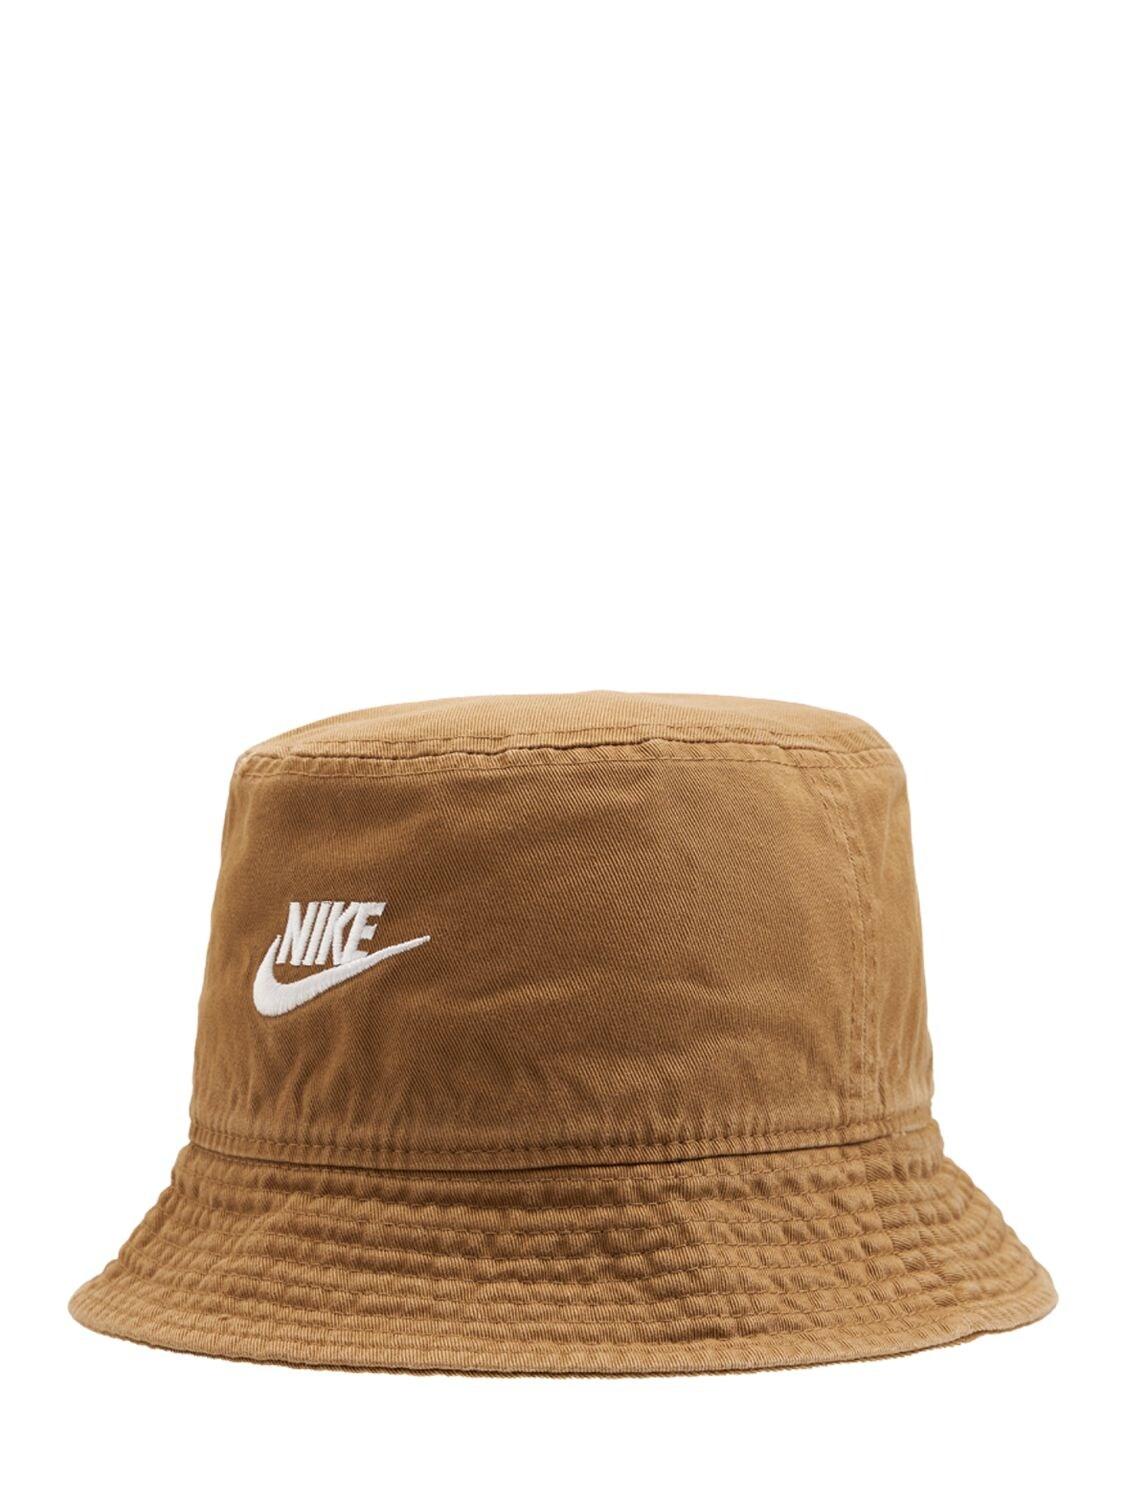 Nike Cotton Bucket Hat in Brown | Lyst